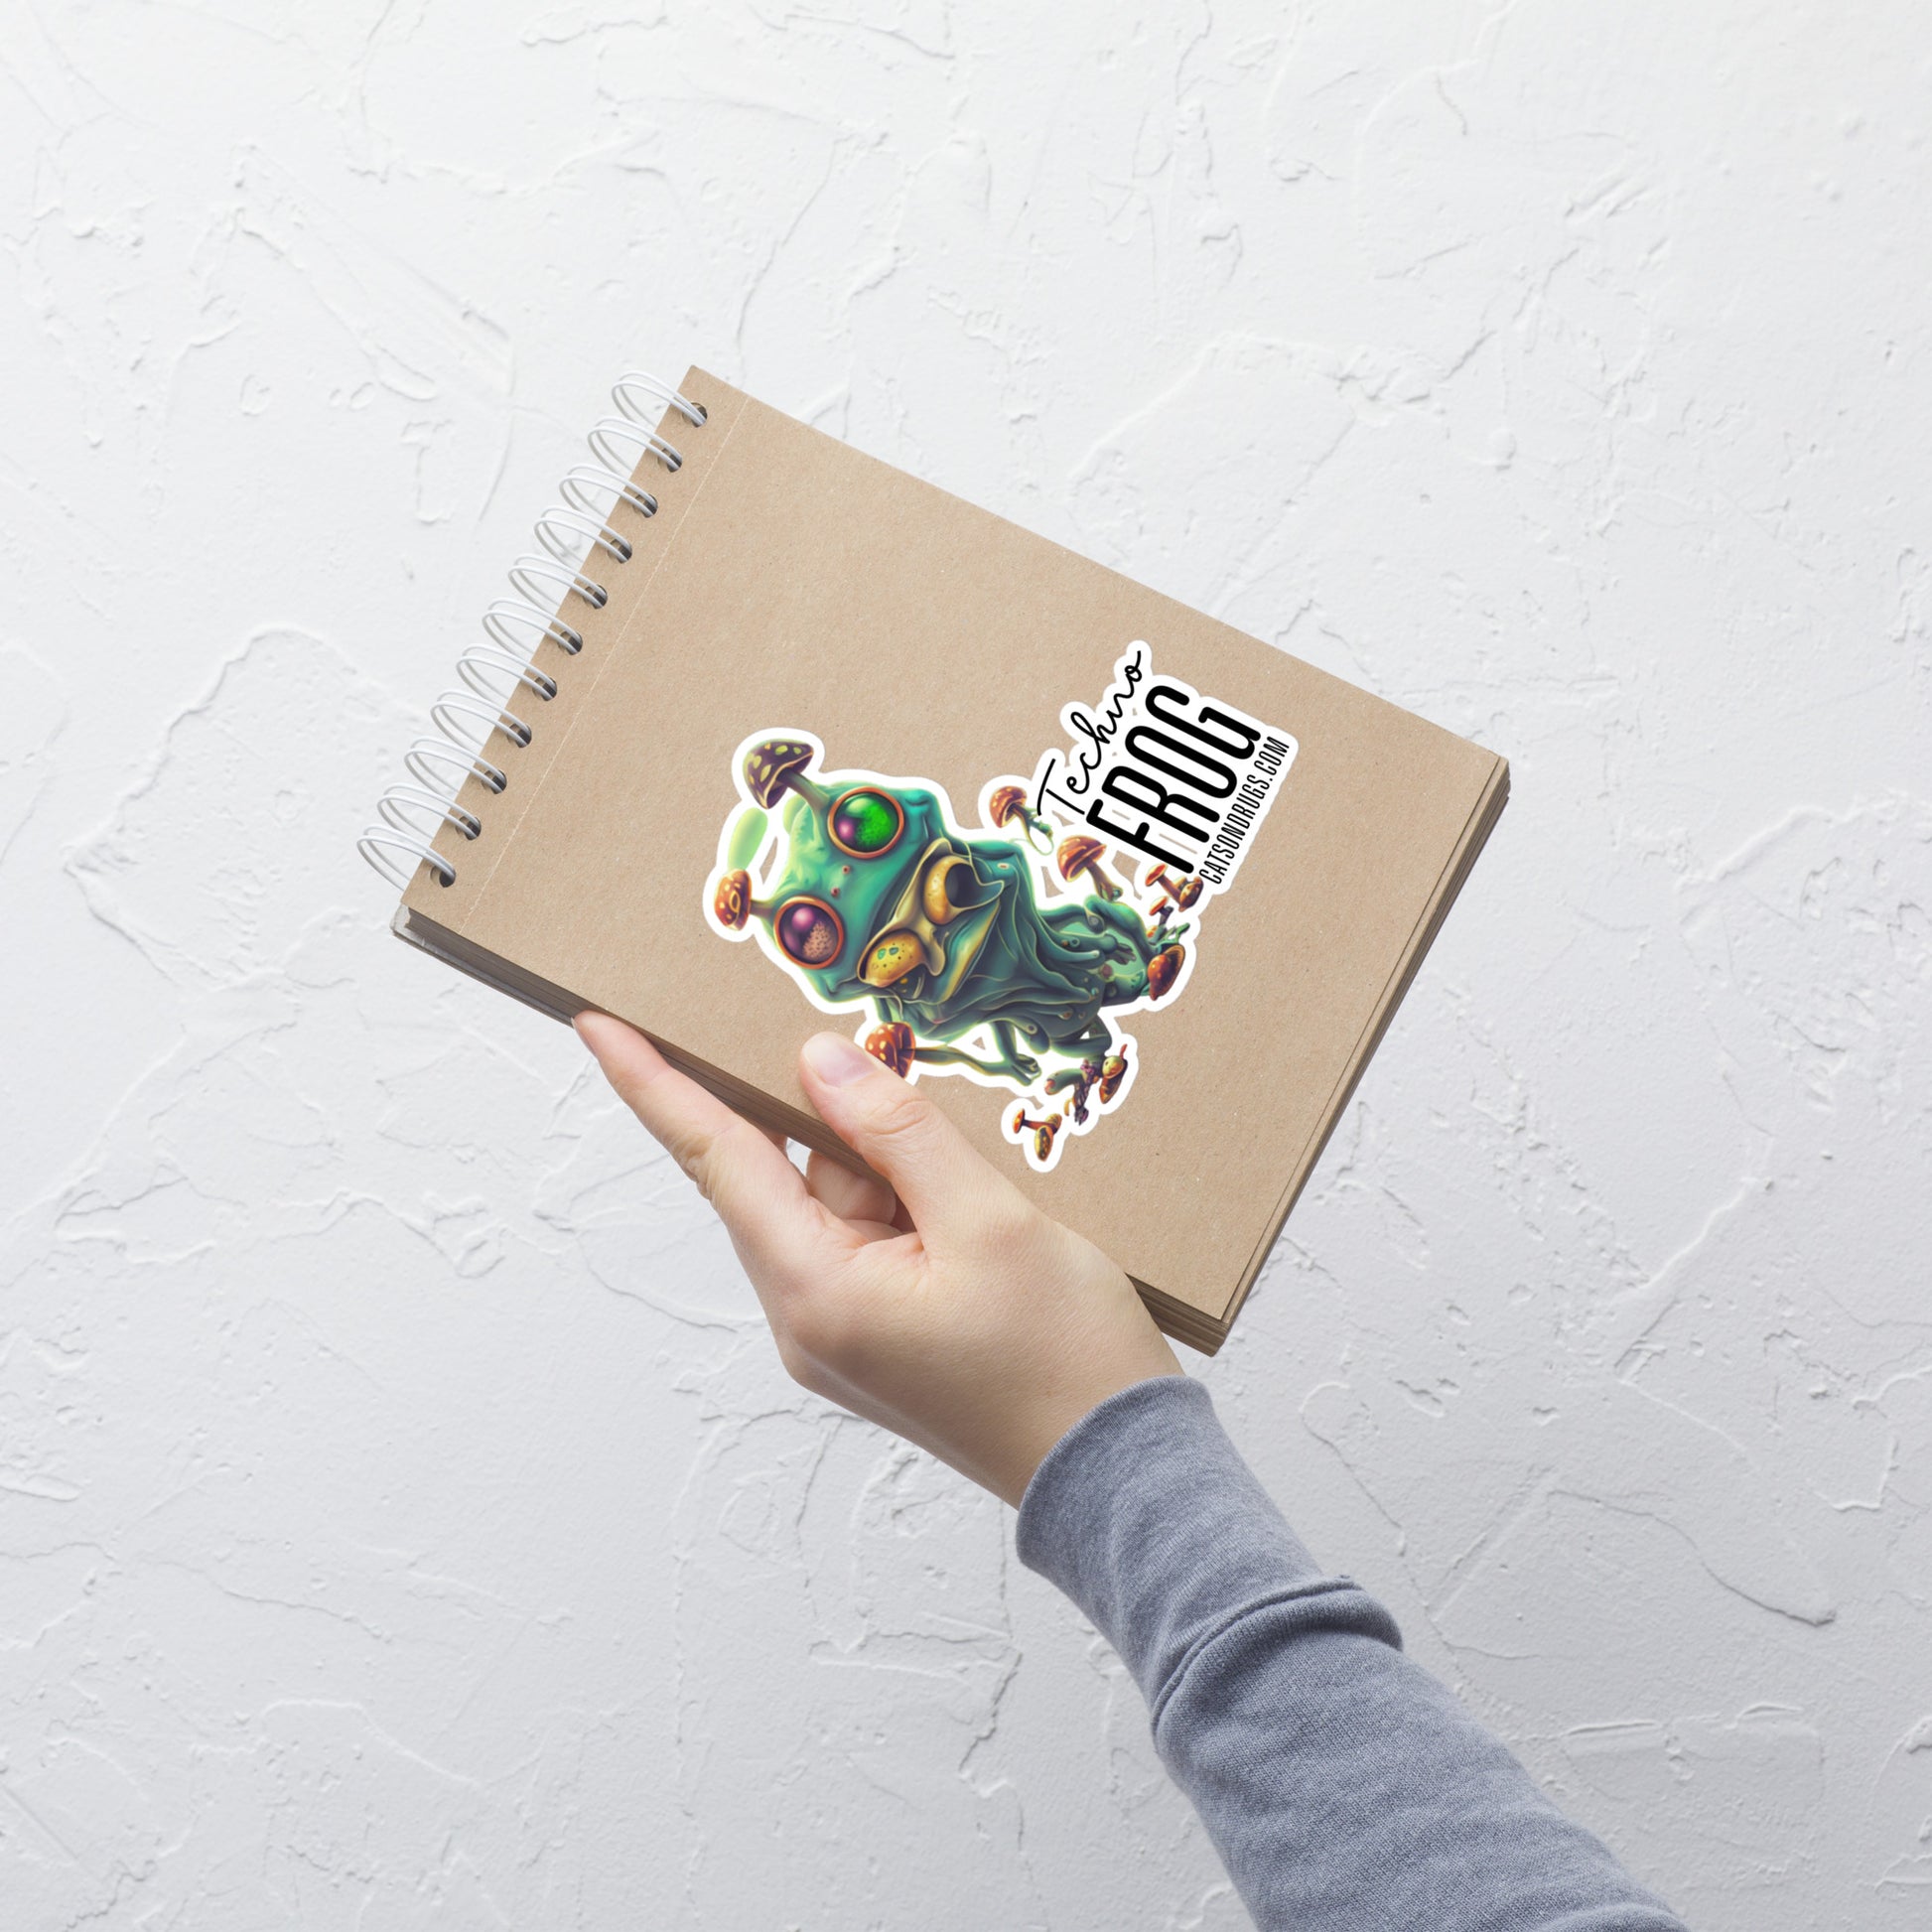 Techno Frog - Bubble-free stickers - CatsOnDrugs